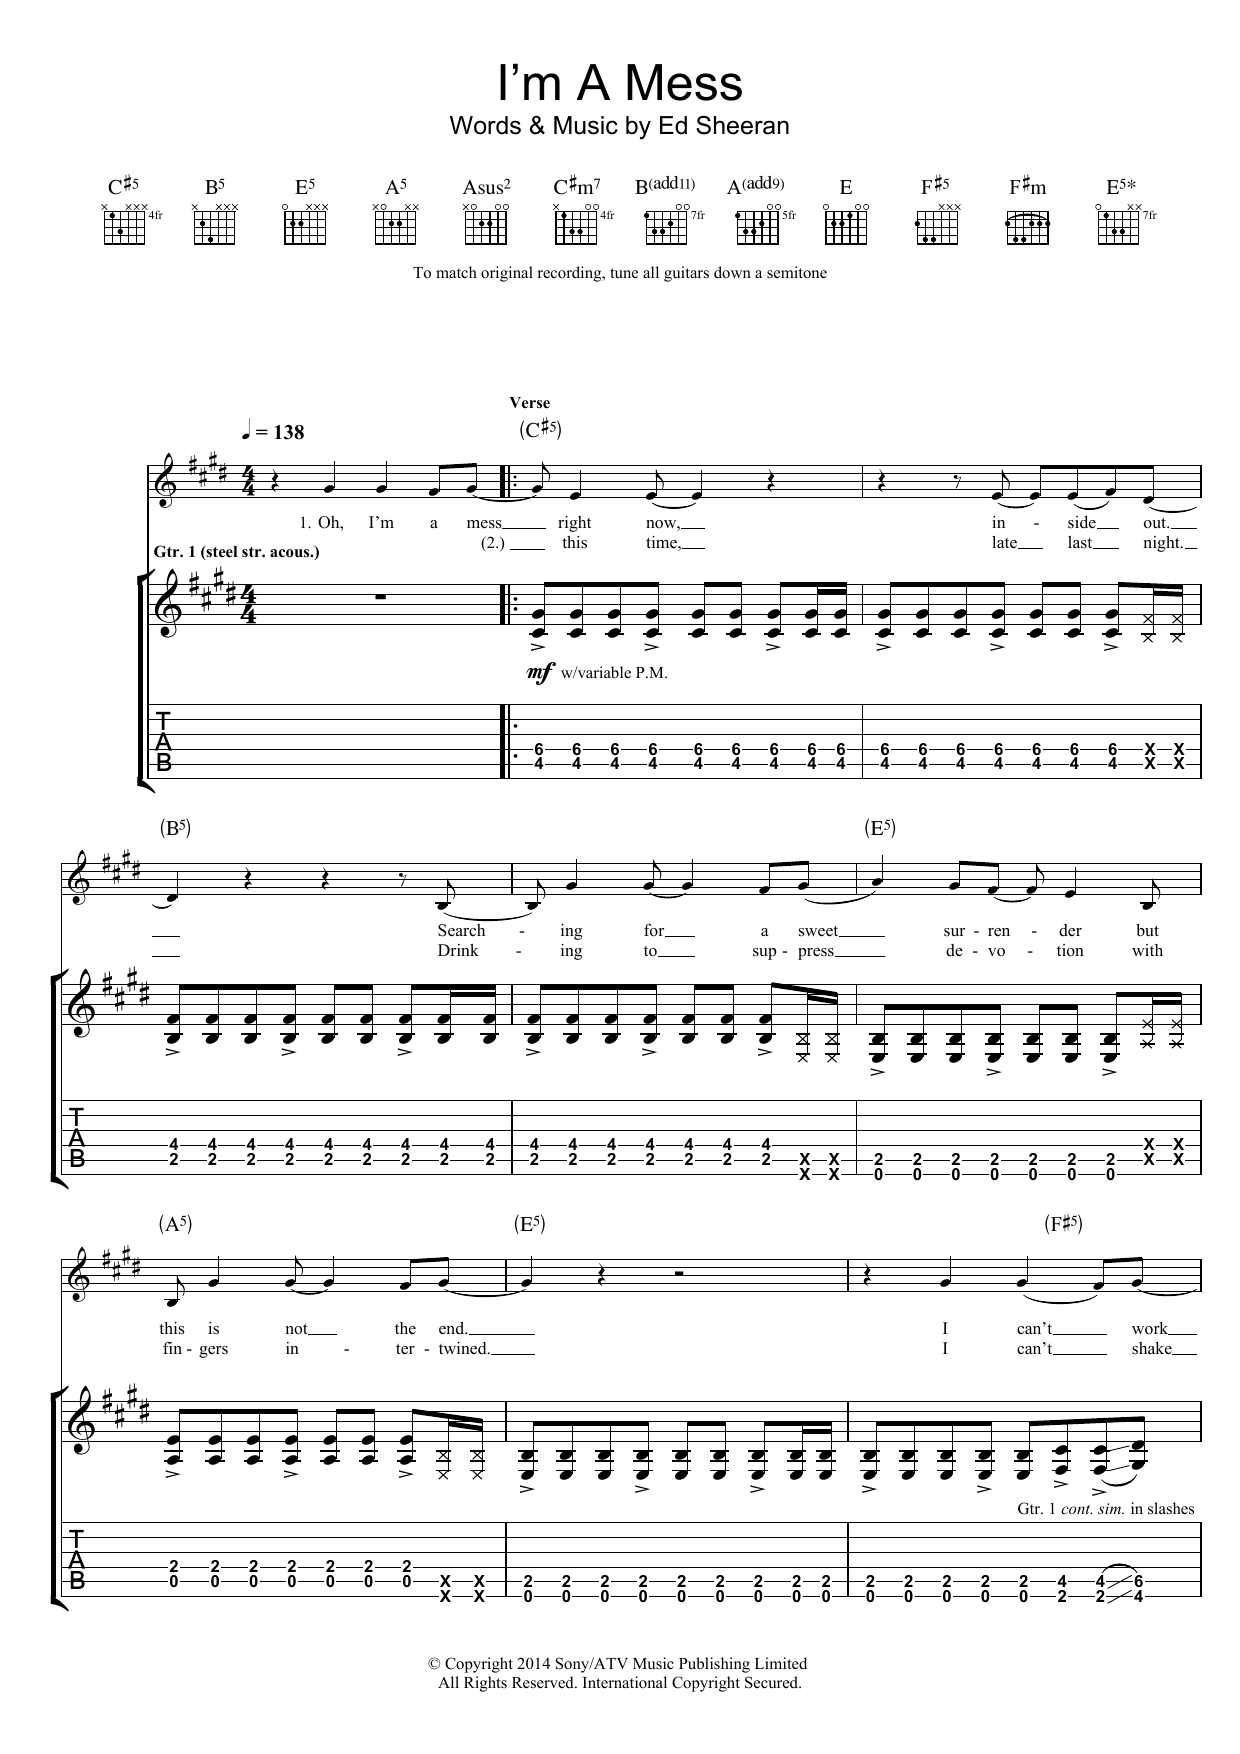 Ed Sheeran I'm A Mess Sheet Music Notes & Chords for Lyrics & Chords - Download or Print PDF